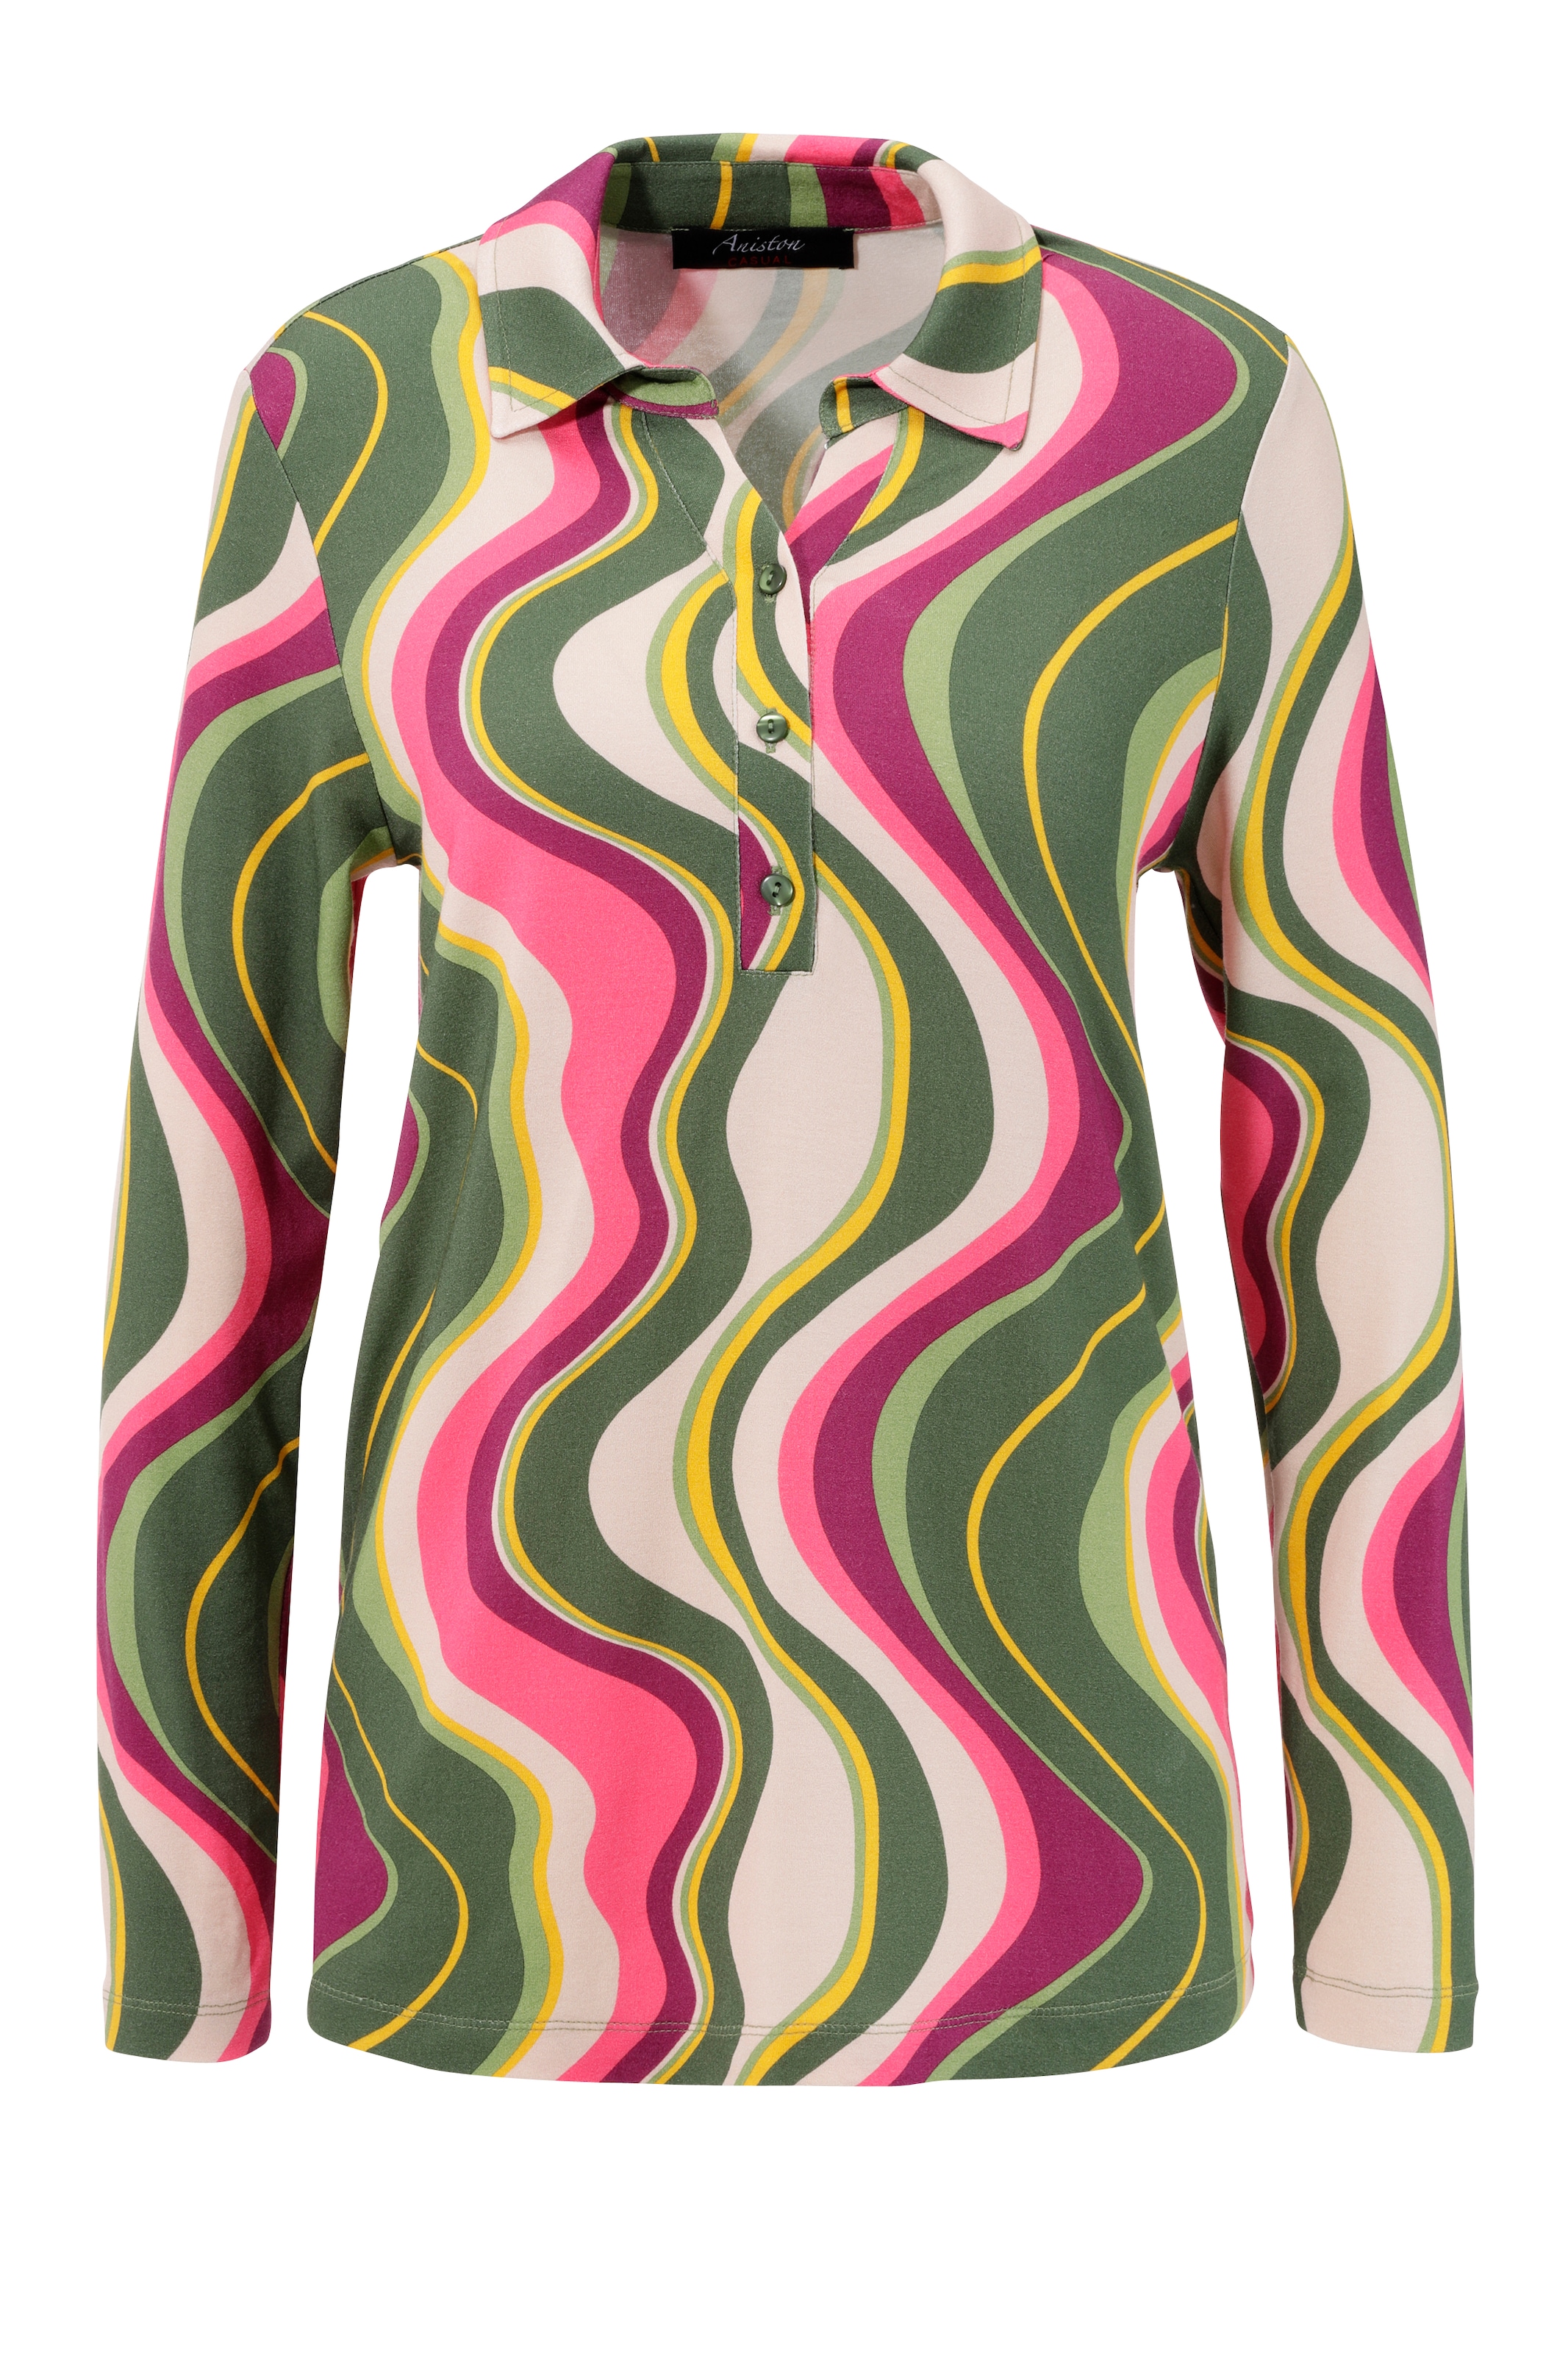 Aniston CASUAL Shirtbluse, farbenfrohes OTTO - Teil bei ein jedes Wellenmuster Unikat online